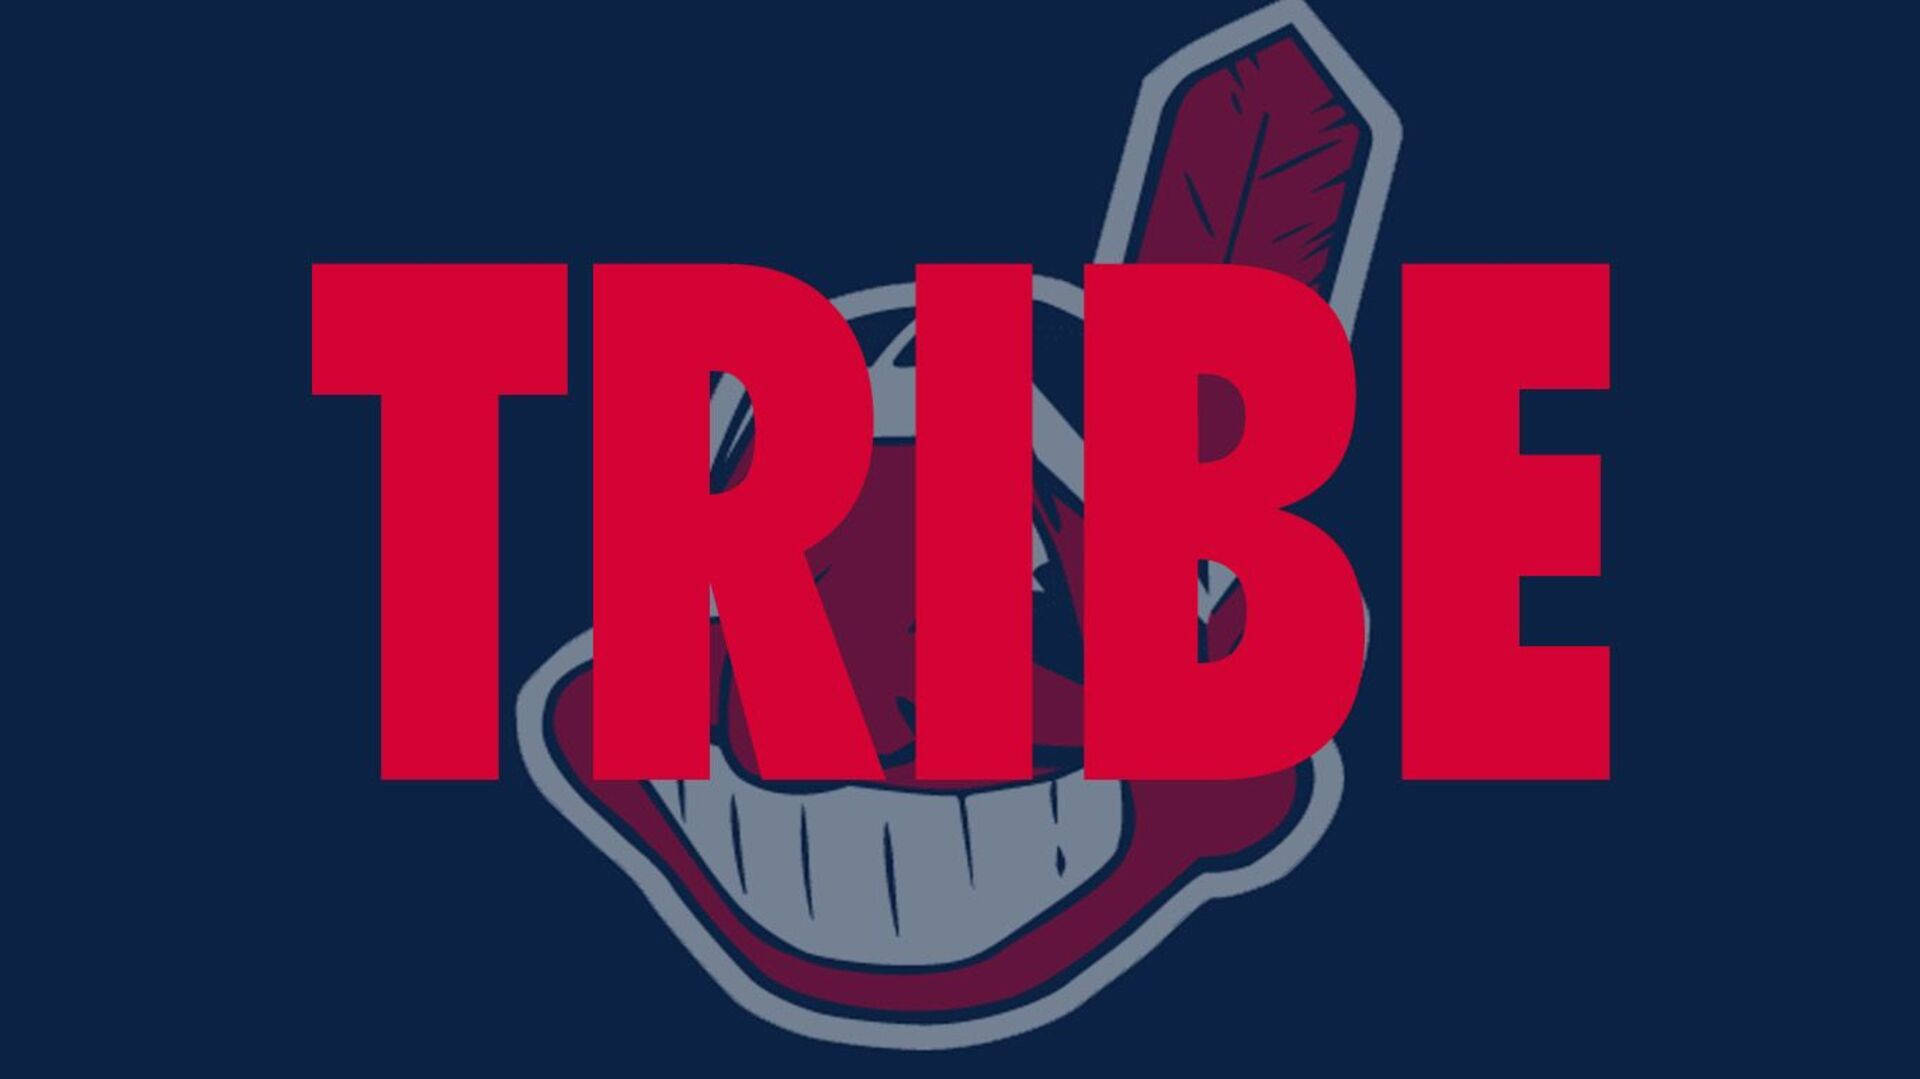 The Cleveland Indians Logo